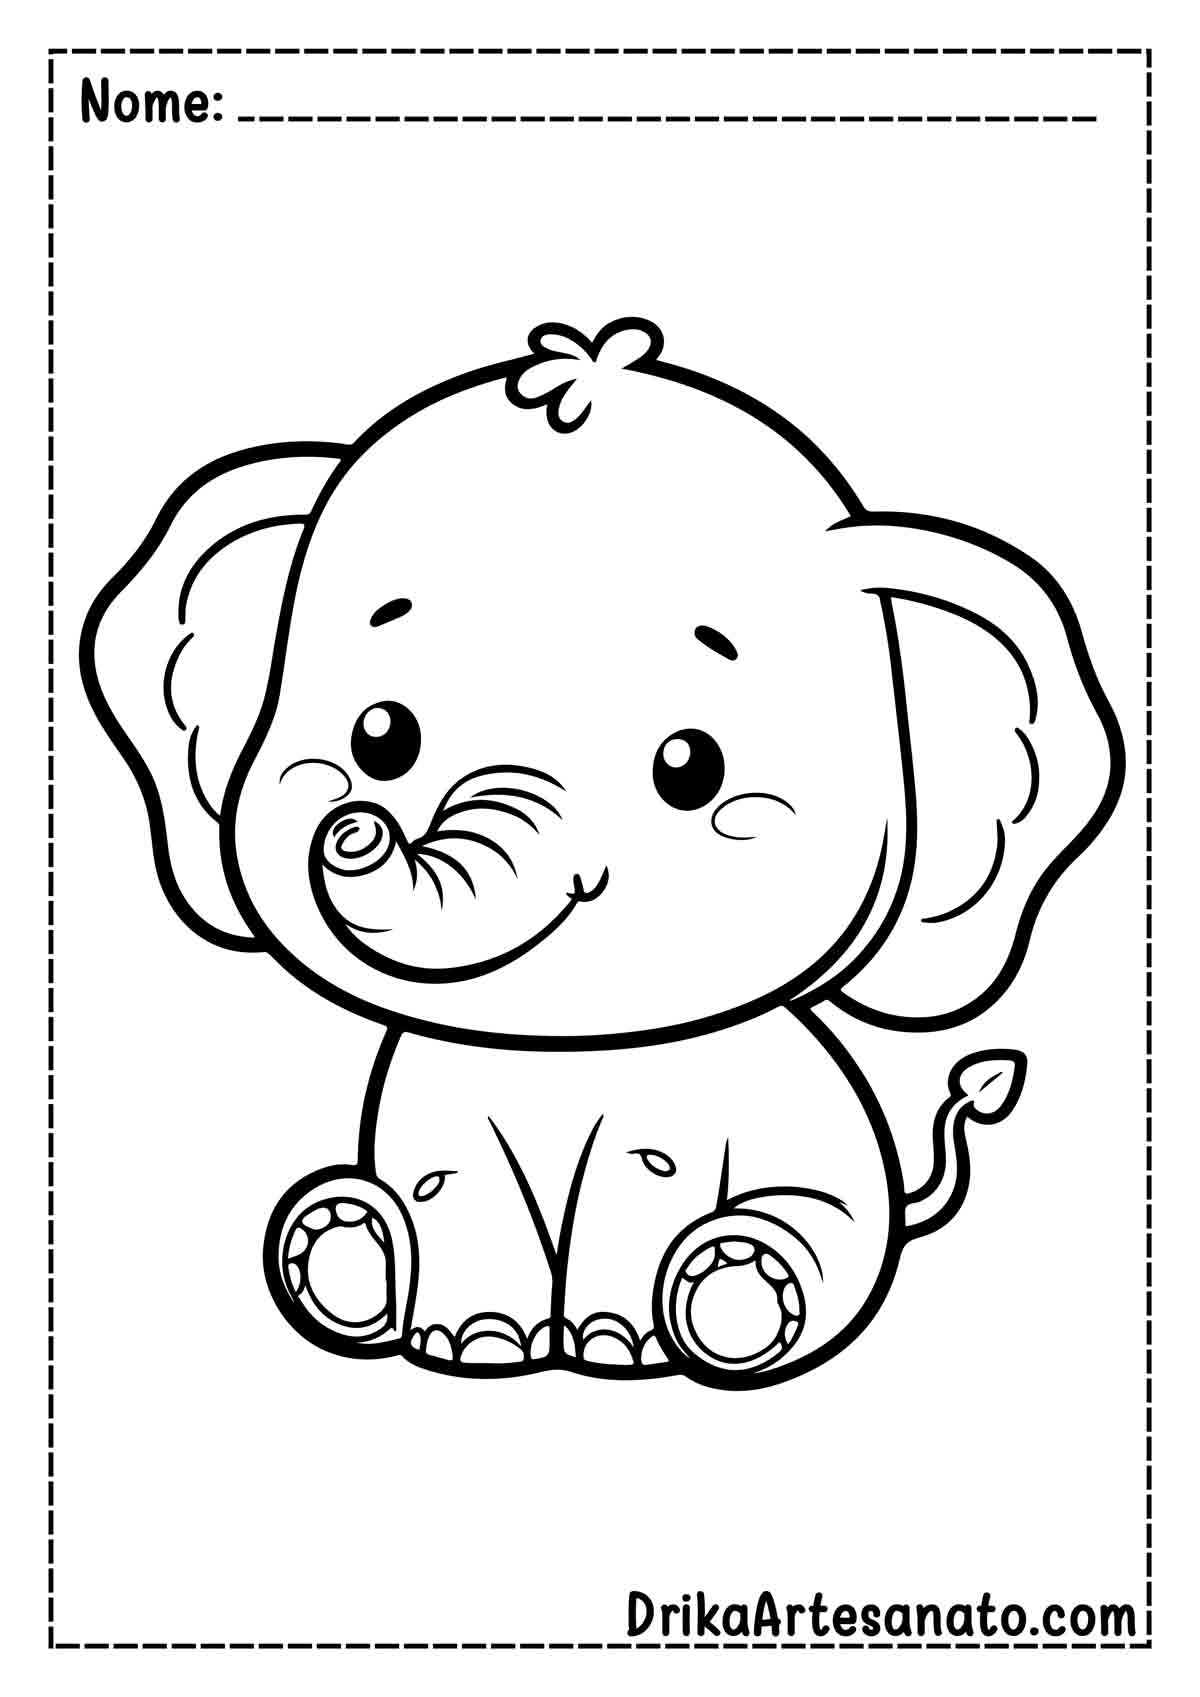 Desenho de Elefante Infantil para Colorir